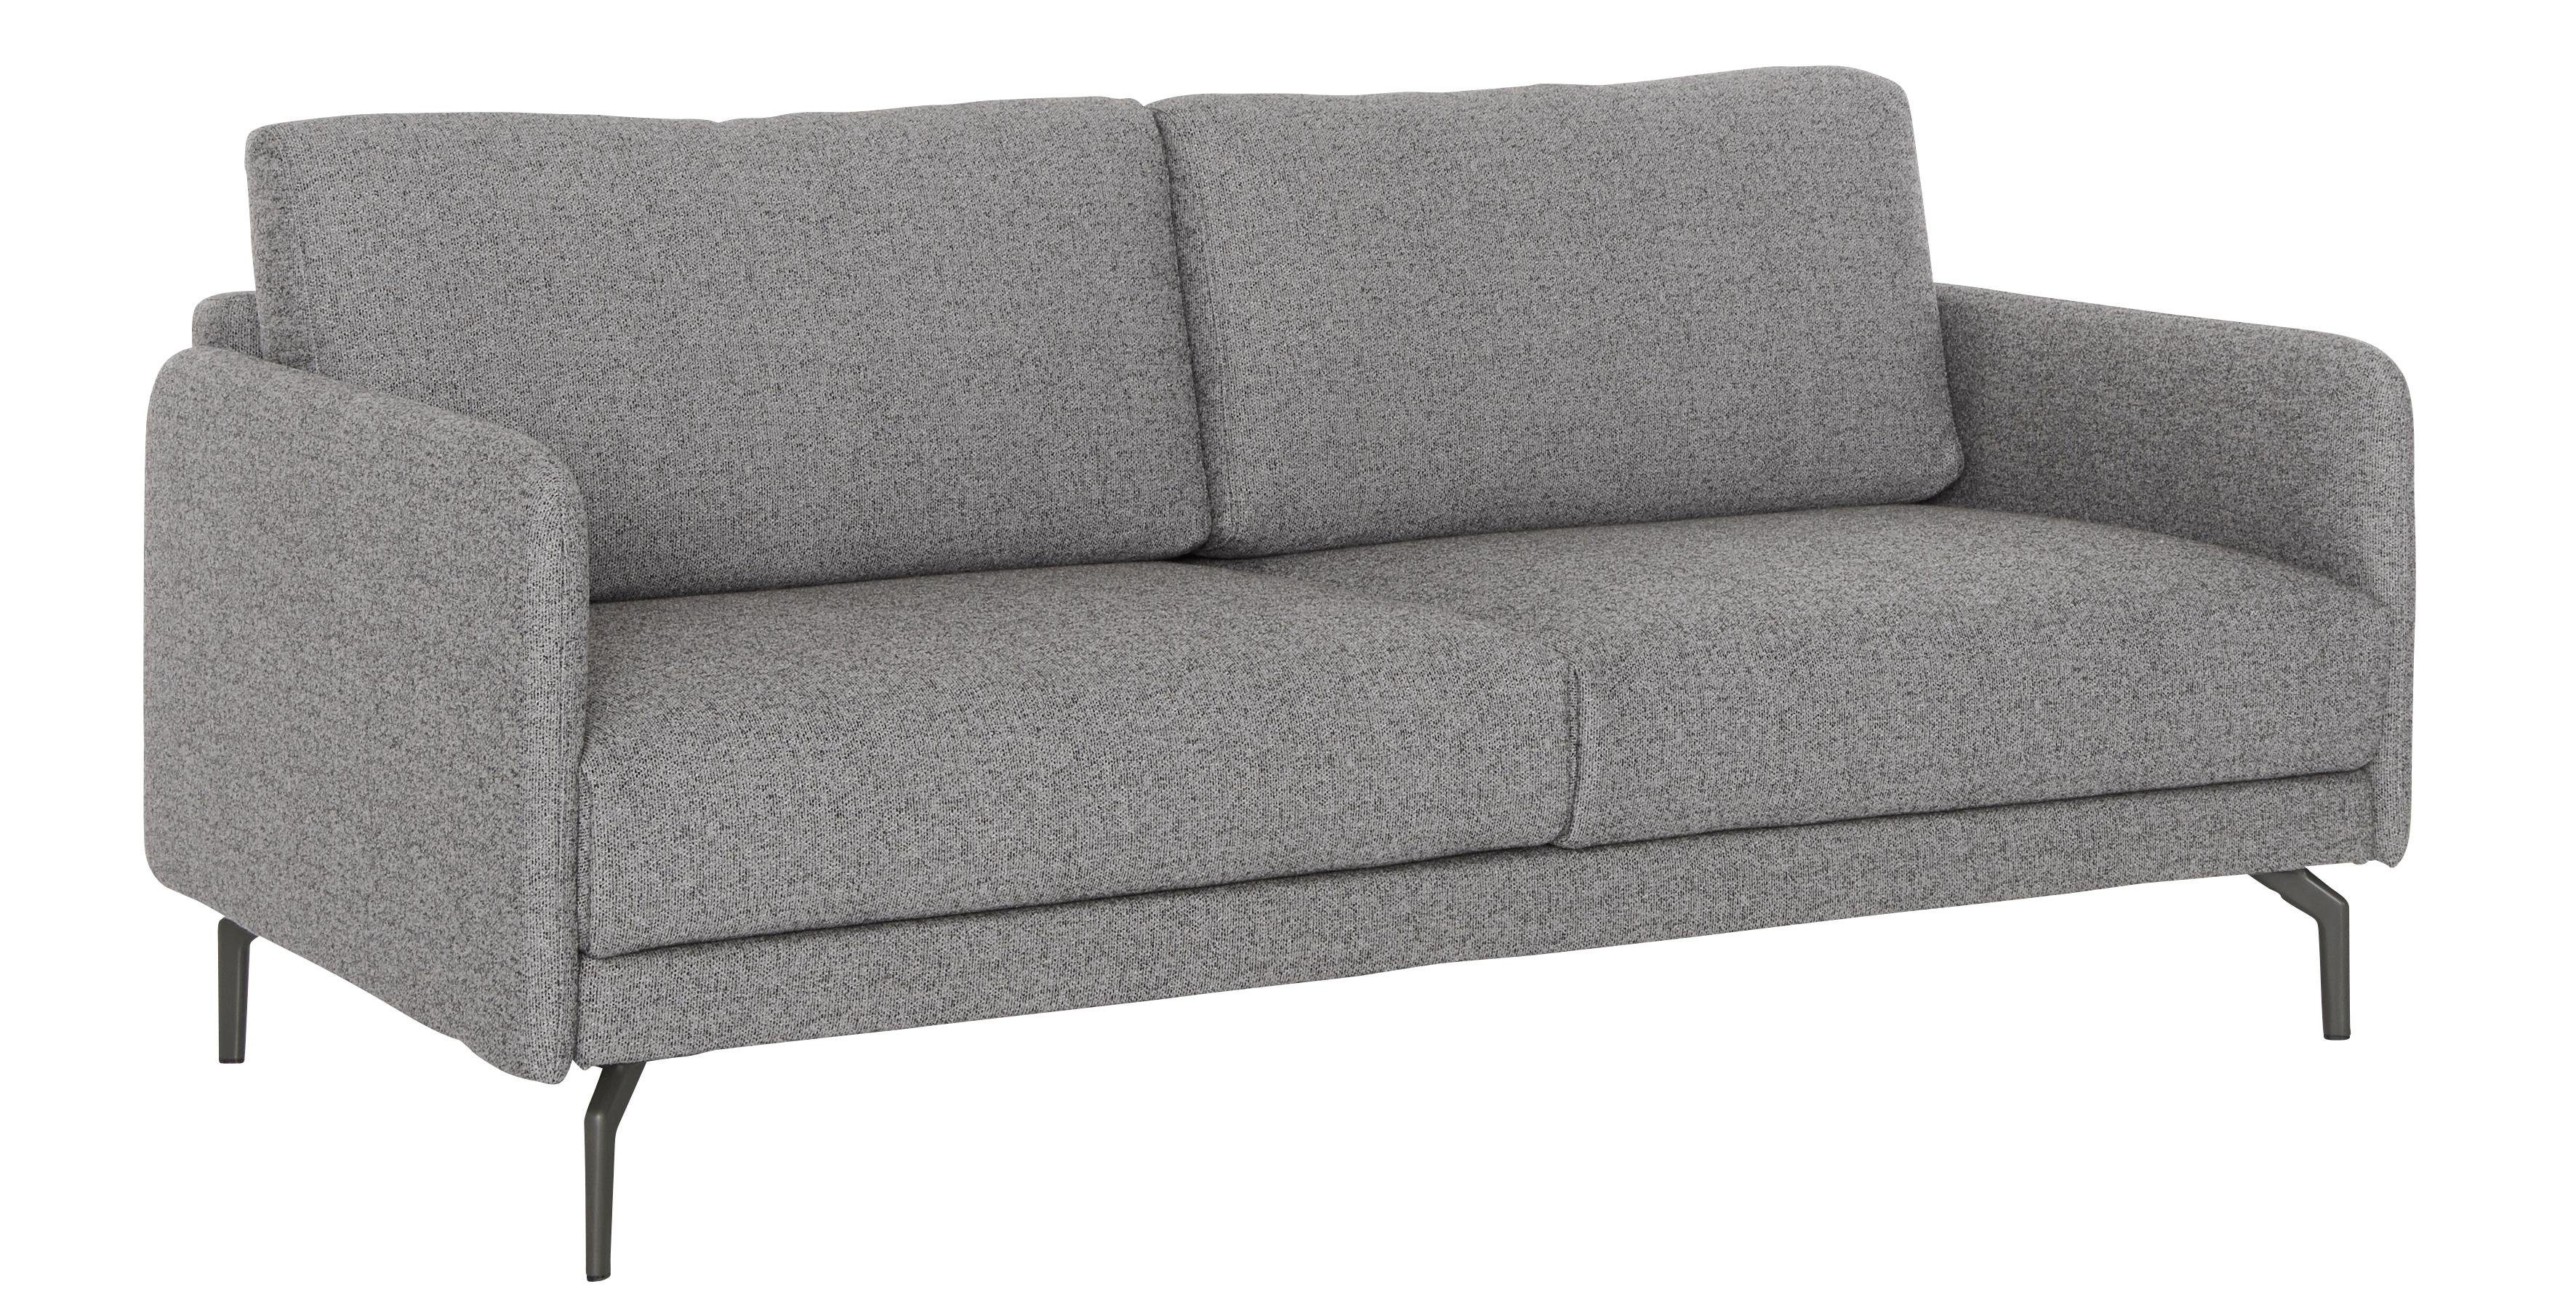 Armlehne umbragrau, Breite sofa in 150 hs.450, 2-Sitzer schmal, sehr cm Alugussfüße hülsta